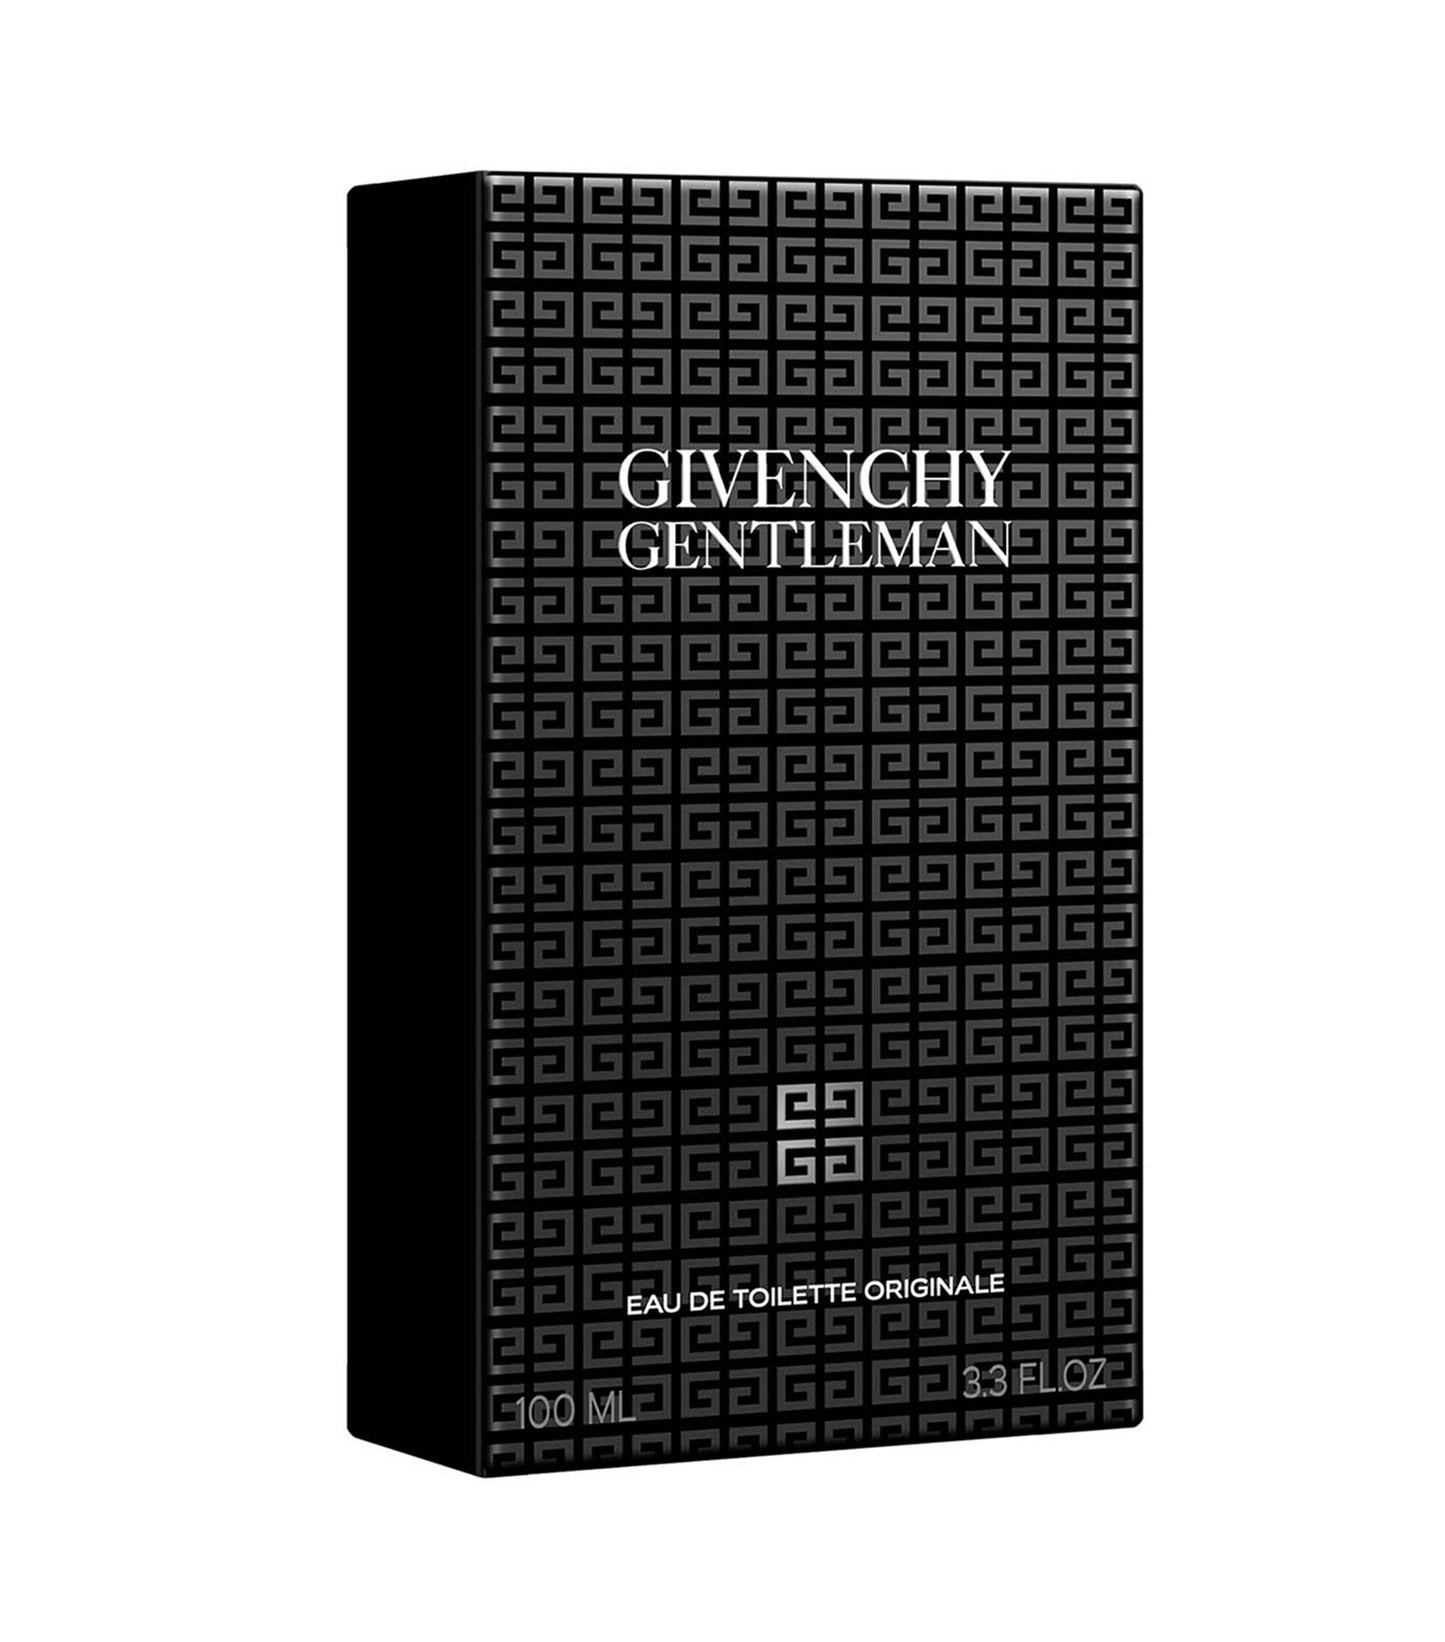 GIVENCHY Gentleman Originale 100ml